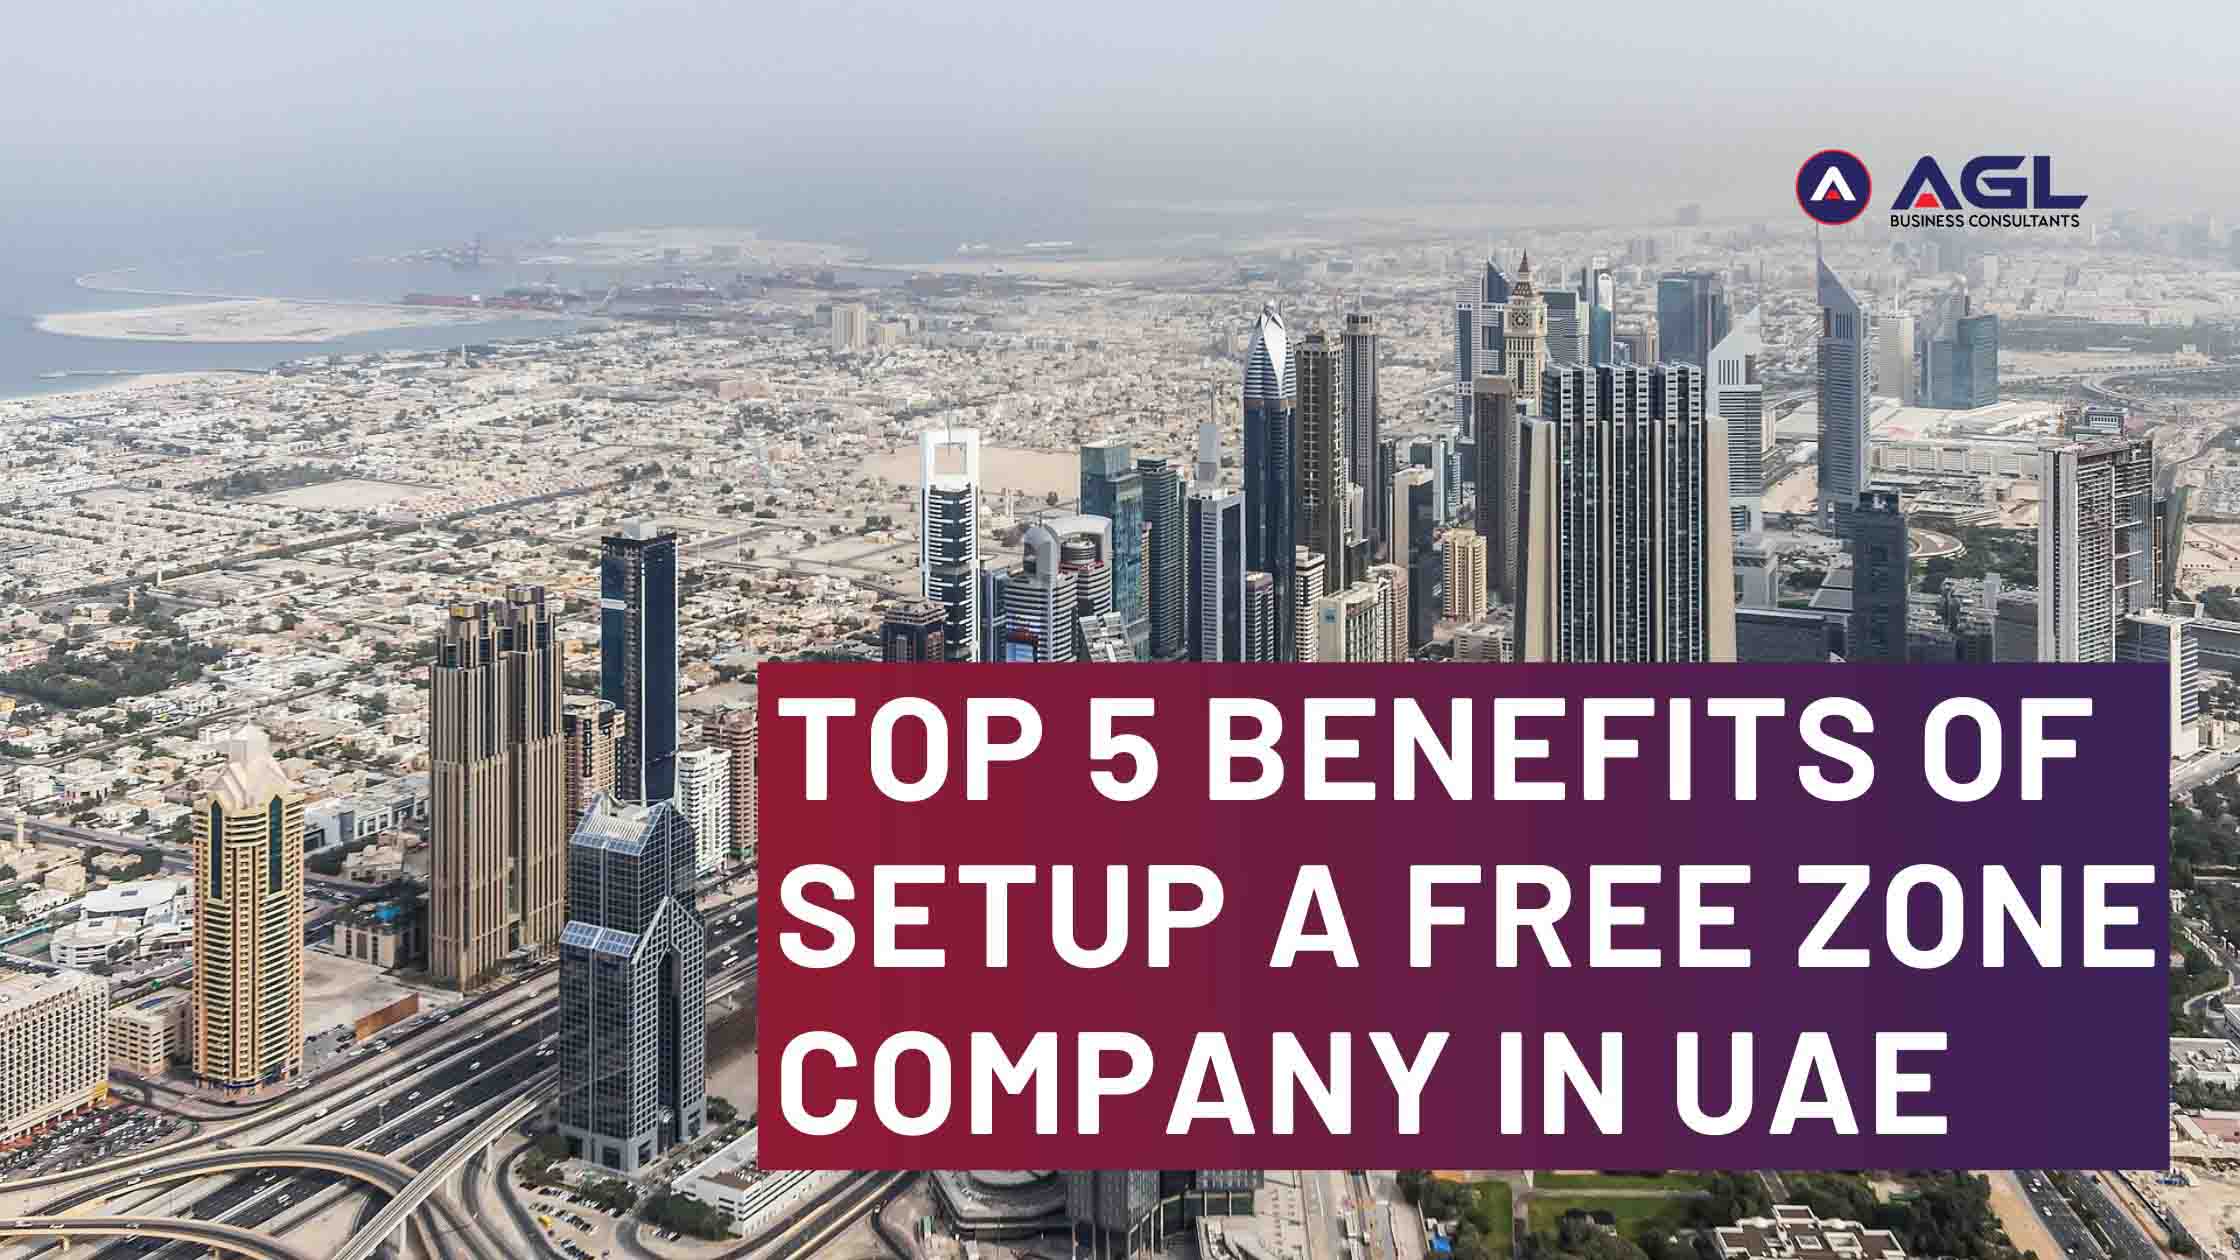 Top 5 Benefits of Setup a Free Zone Company in UAE